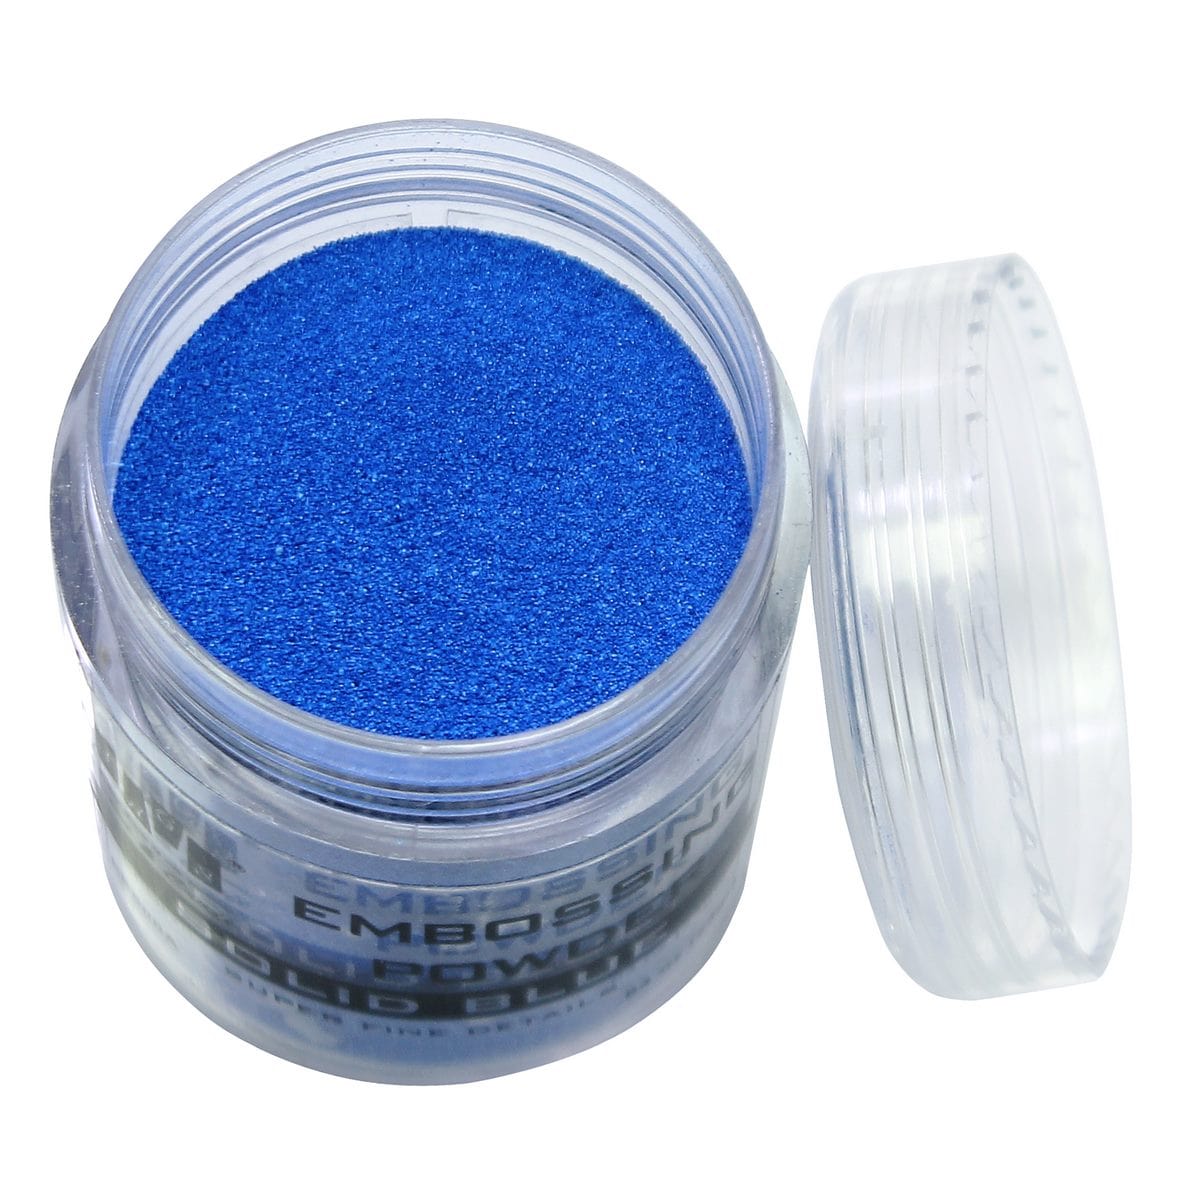 jags-mumbai Emboss material Embossing Powder Solid Blue